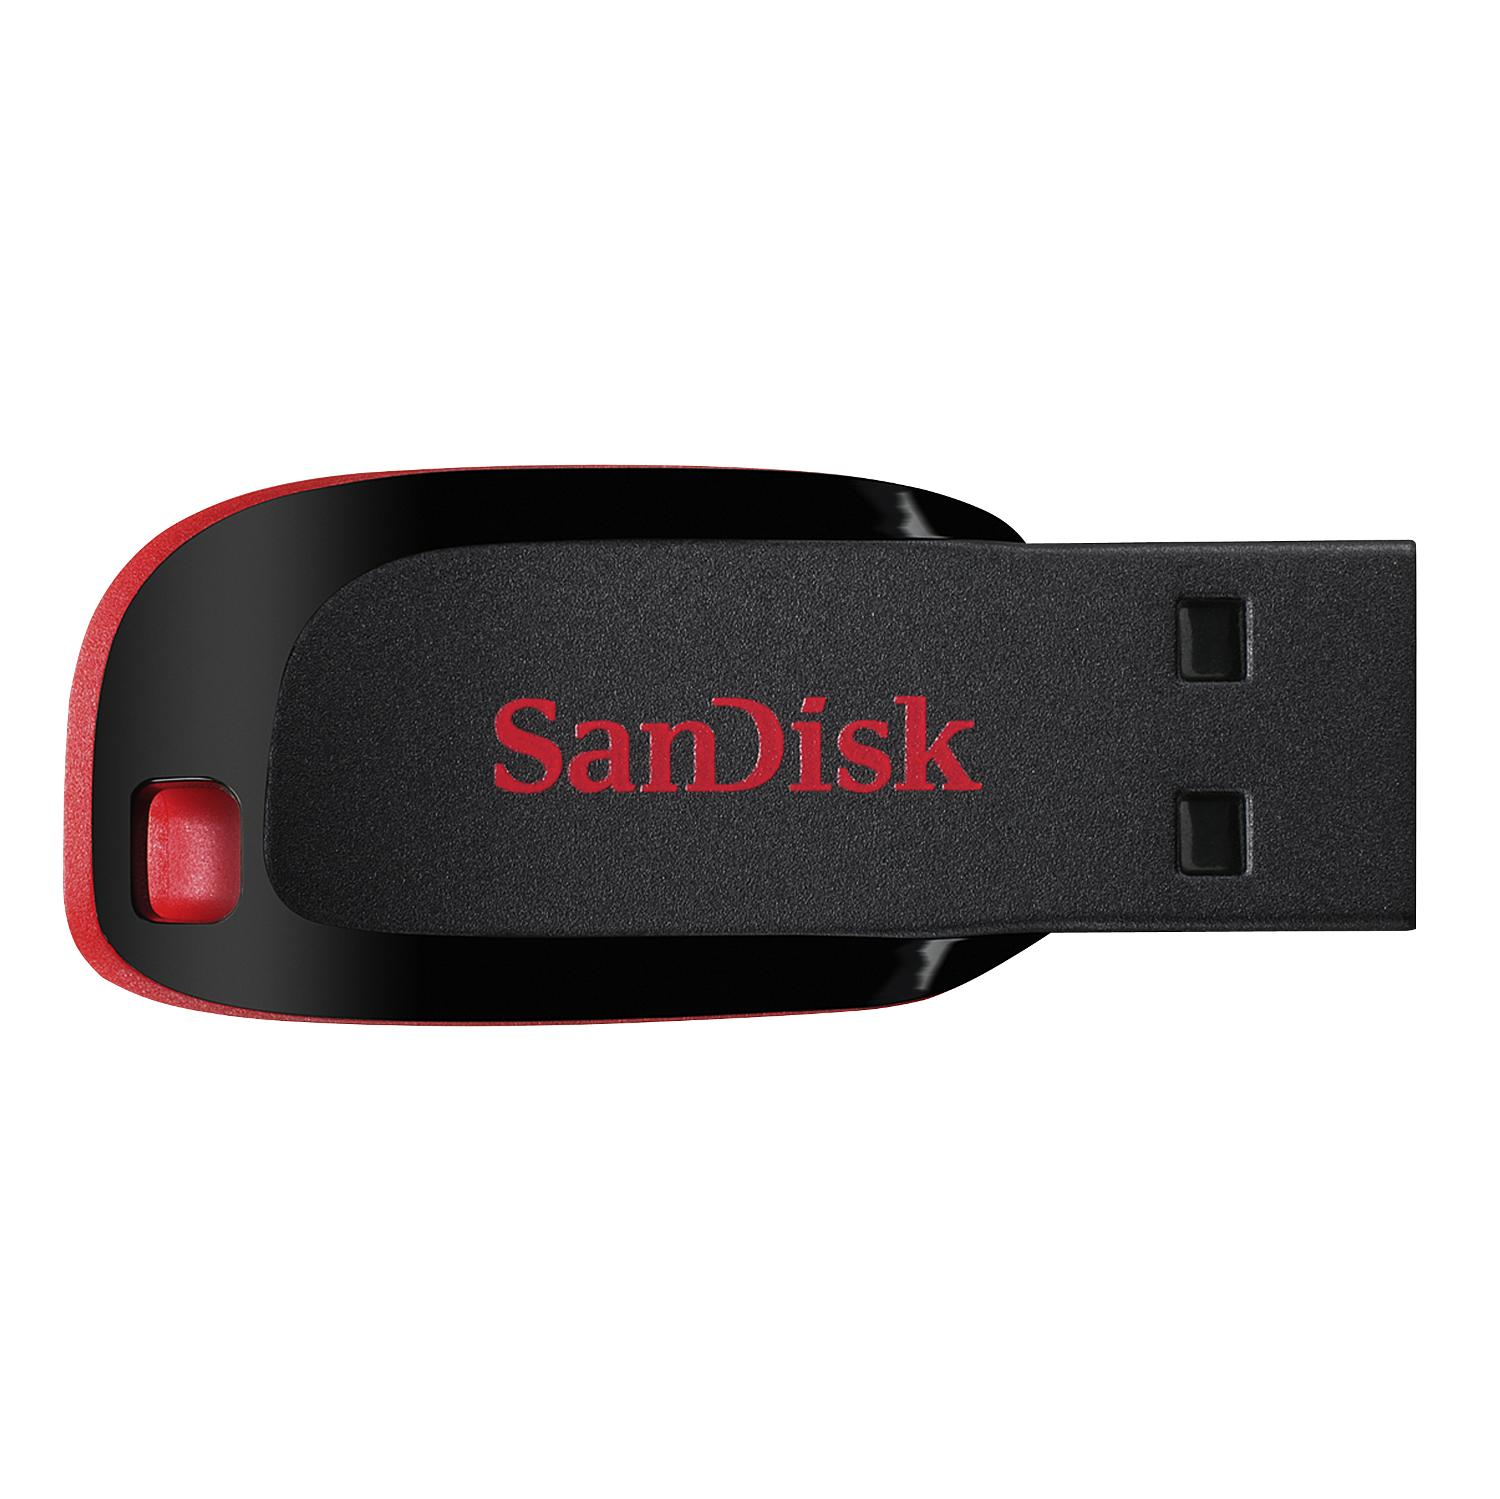 Blade GB, SANDISK USB-Stick, Rot 15 16 Cruzer MB/s,